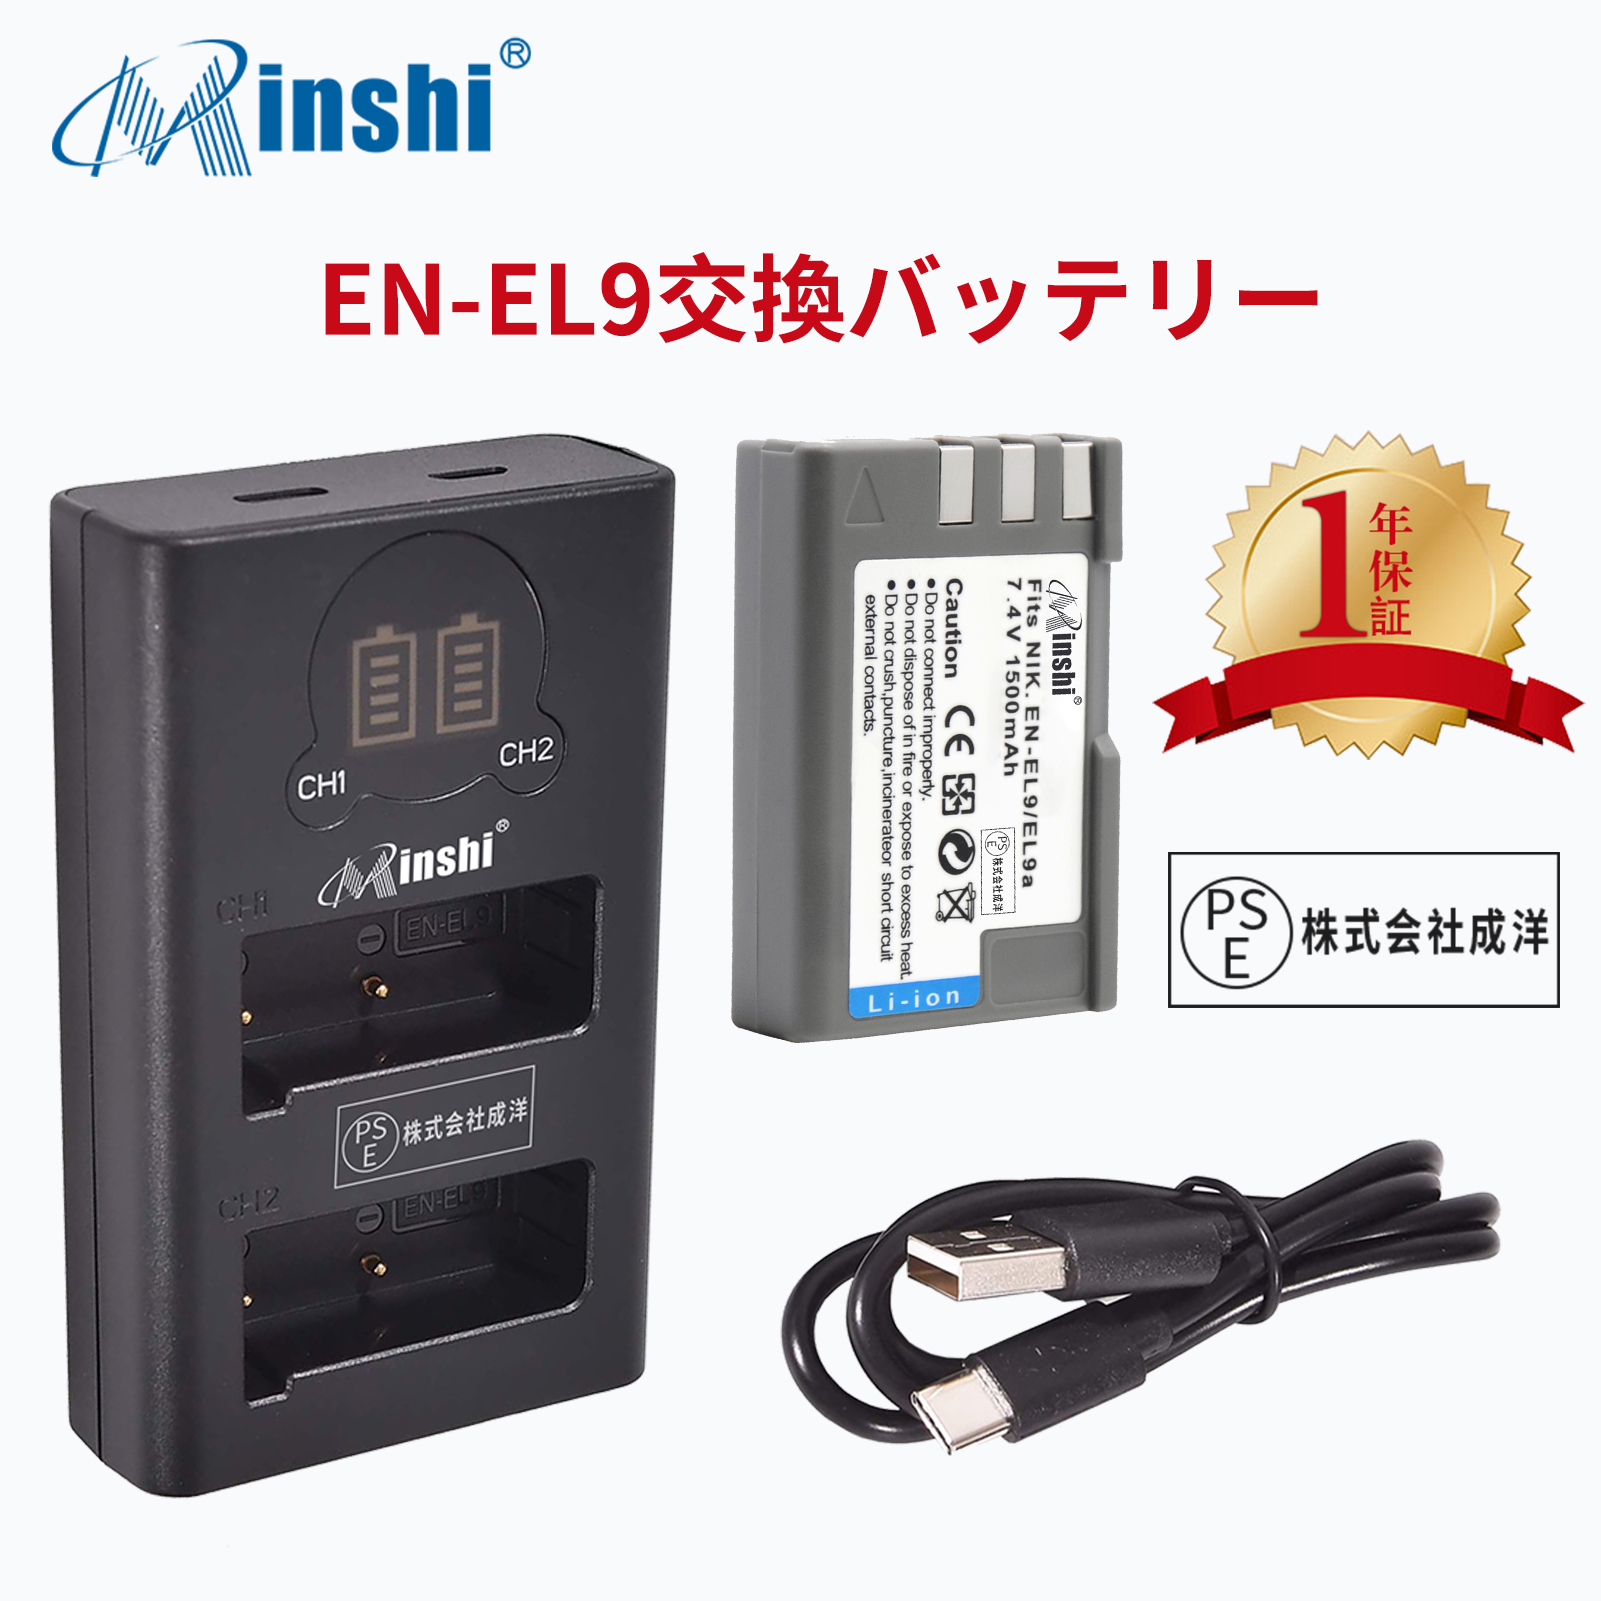 【1年保証】minshi NIKON D60【1500mAh 7.4V】 【互換急速USBチャージャー】PSE認定済 高品質EN-EL9 EN-EL9a EN-EL9e互換バッテリーPHB